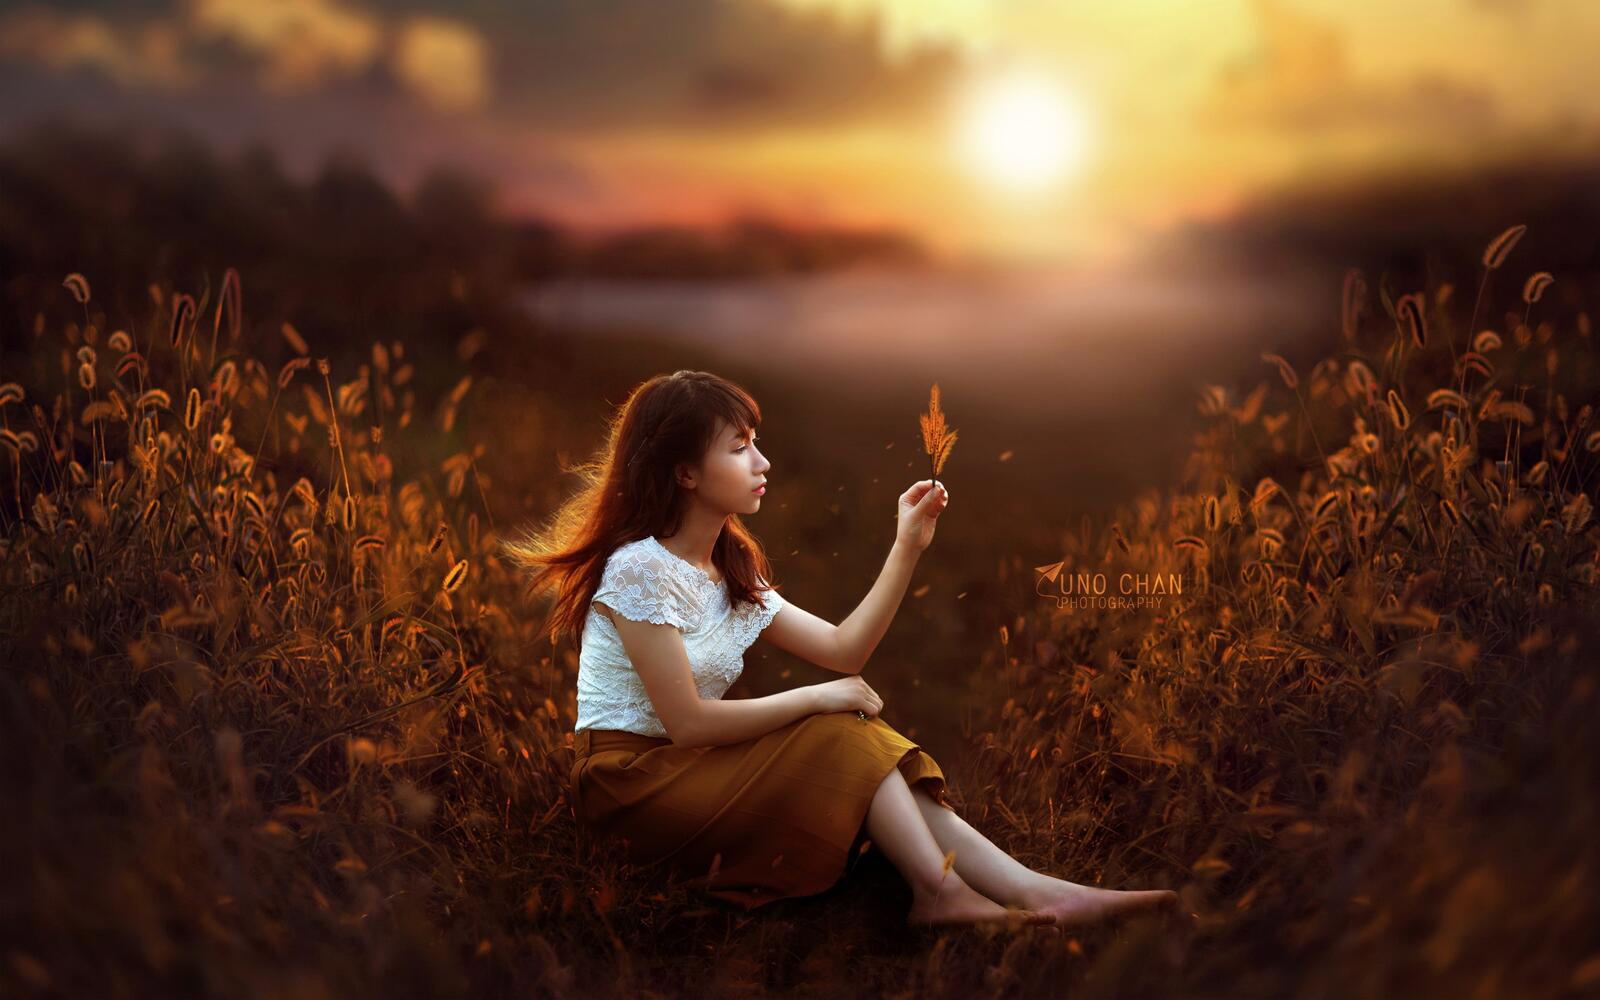 Бесплатное фото Китаянка с цветком на фоне заката солнца